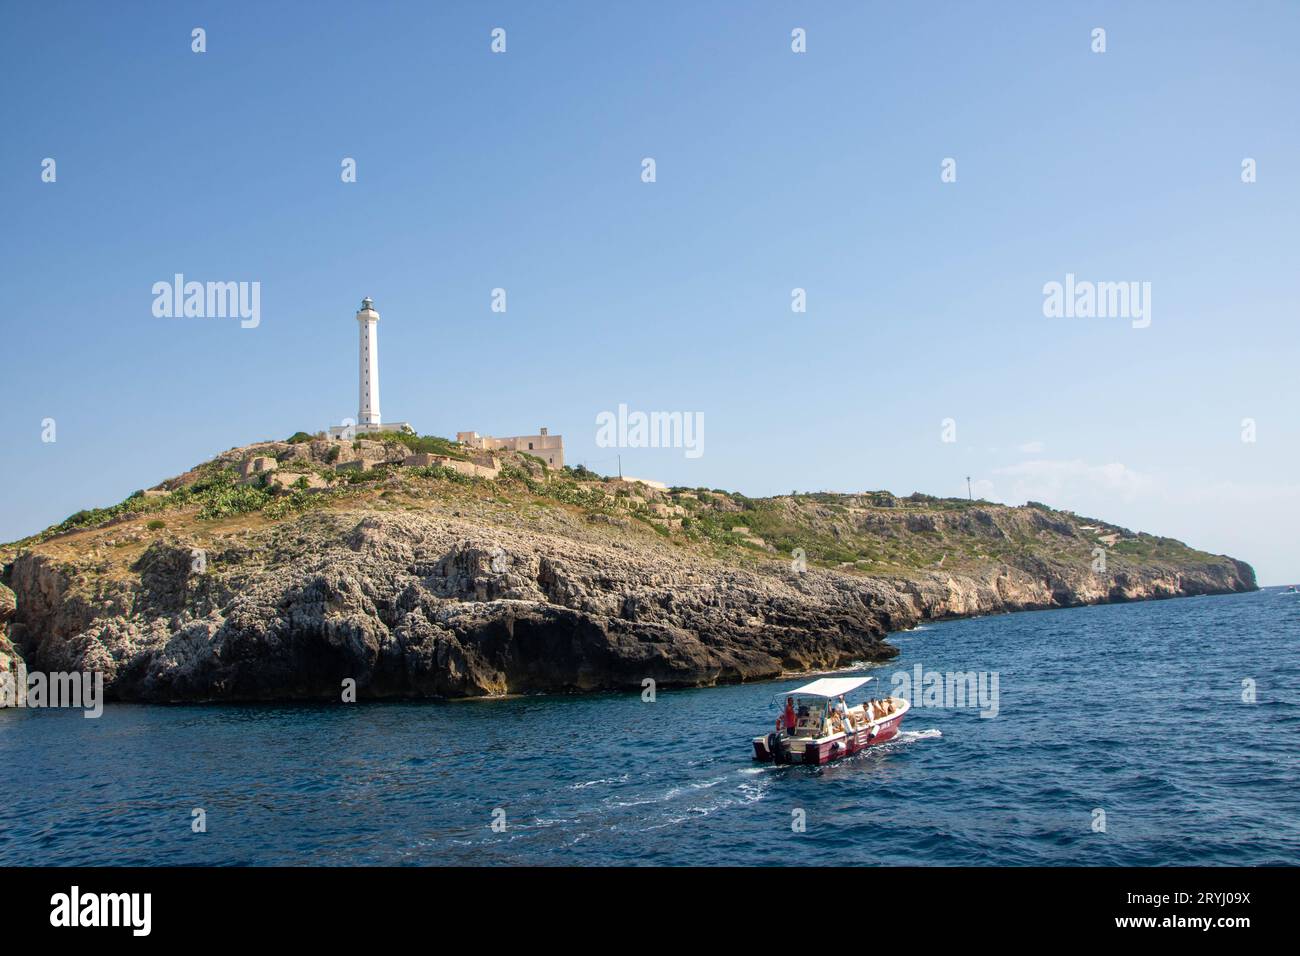 The lighthouse on Punta Meliso at Santa Maria di Leuca, Apulia region, Italy Stock Photo